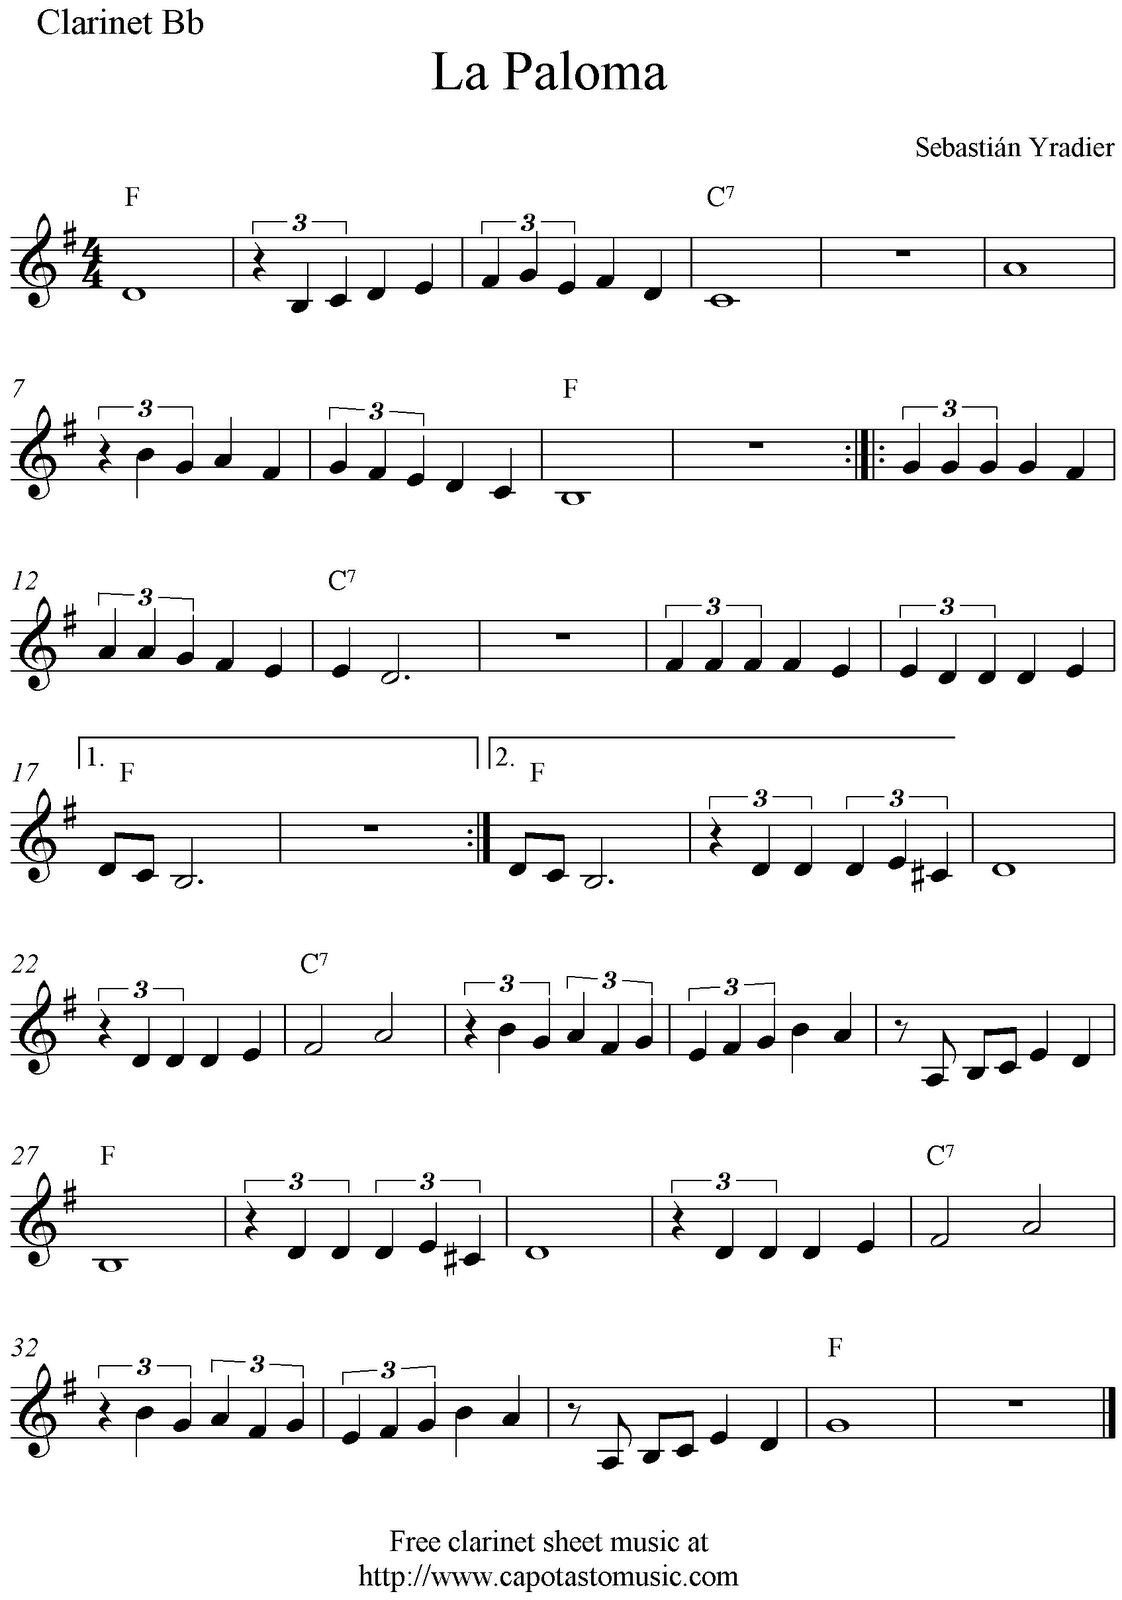 La Paloma, Free Clarinet Sheet Music Notes - Free Printable Clarinet Music